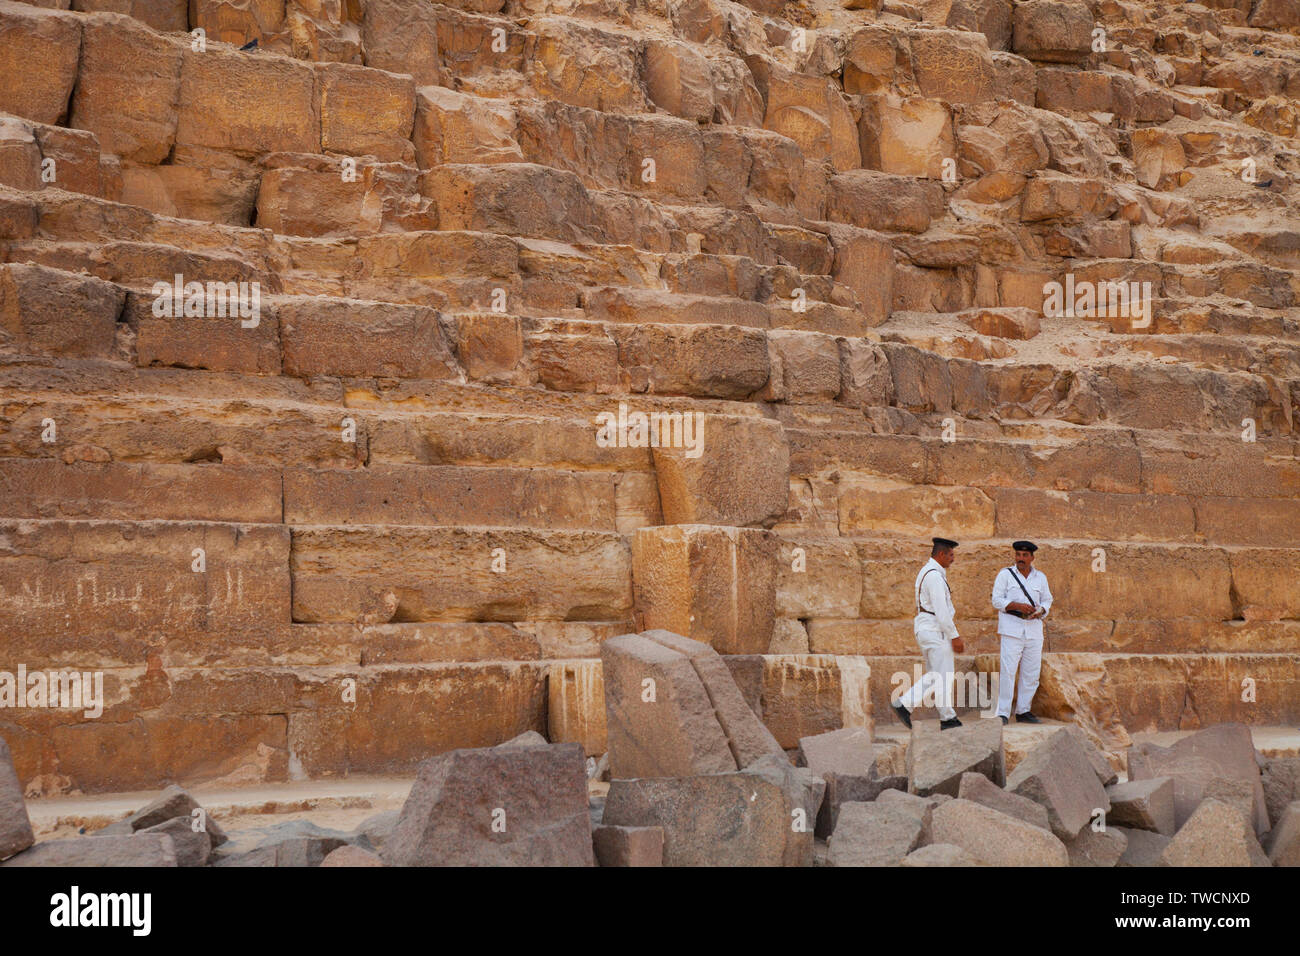 Pirámide de Kefrén, Meseta de Giza, El Cairo, Valle del Nilo, Egipto. Stock Photo